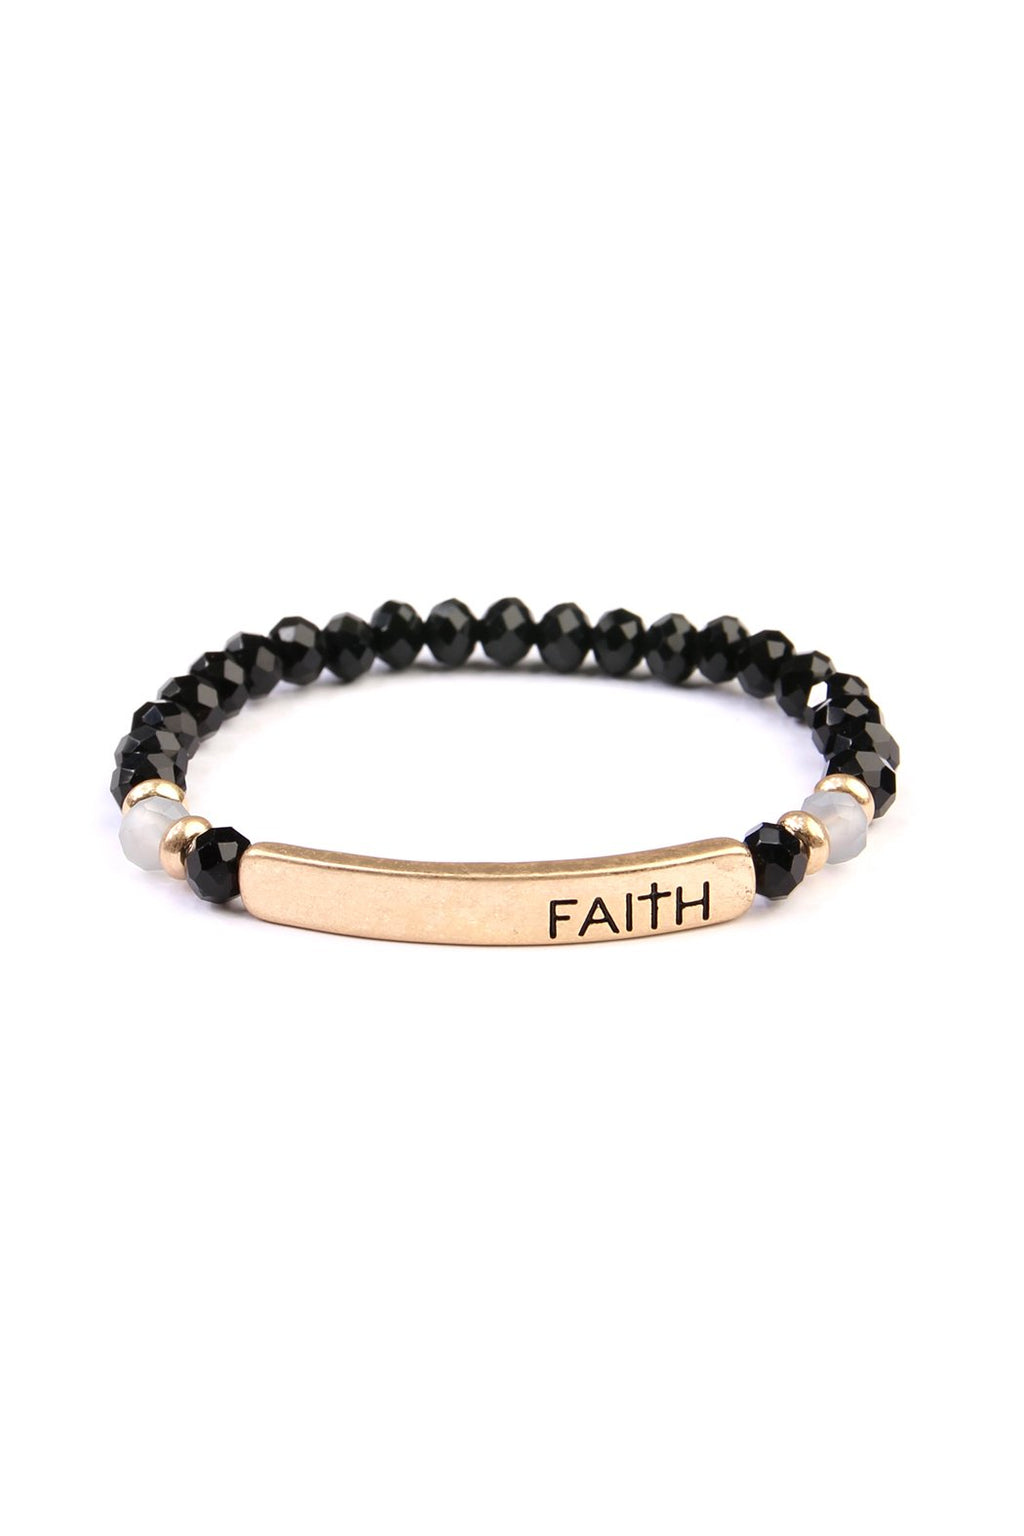 "Faith" Rondelle Beads Bracelet